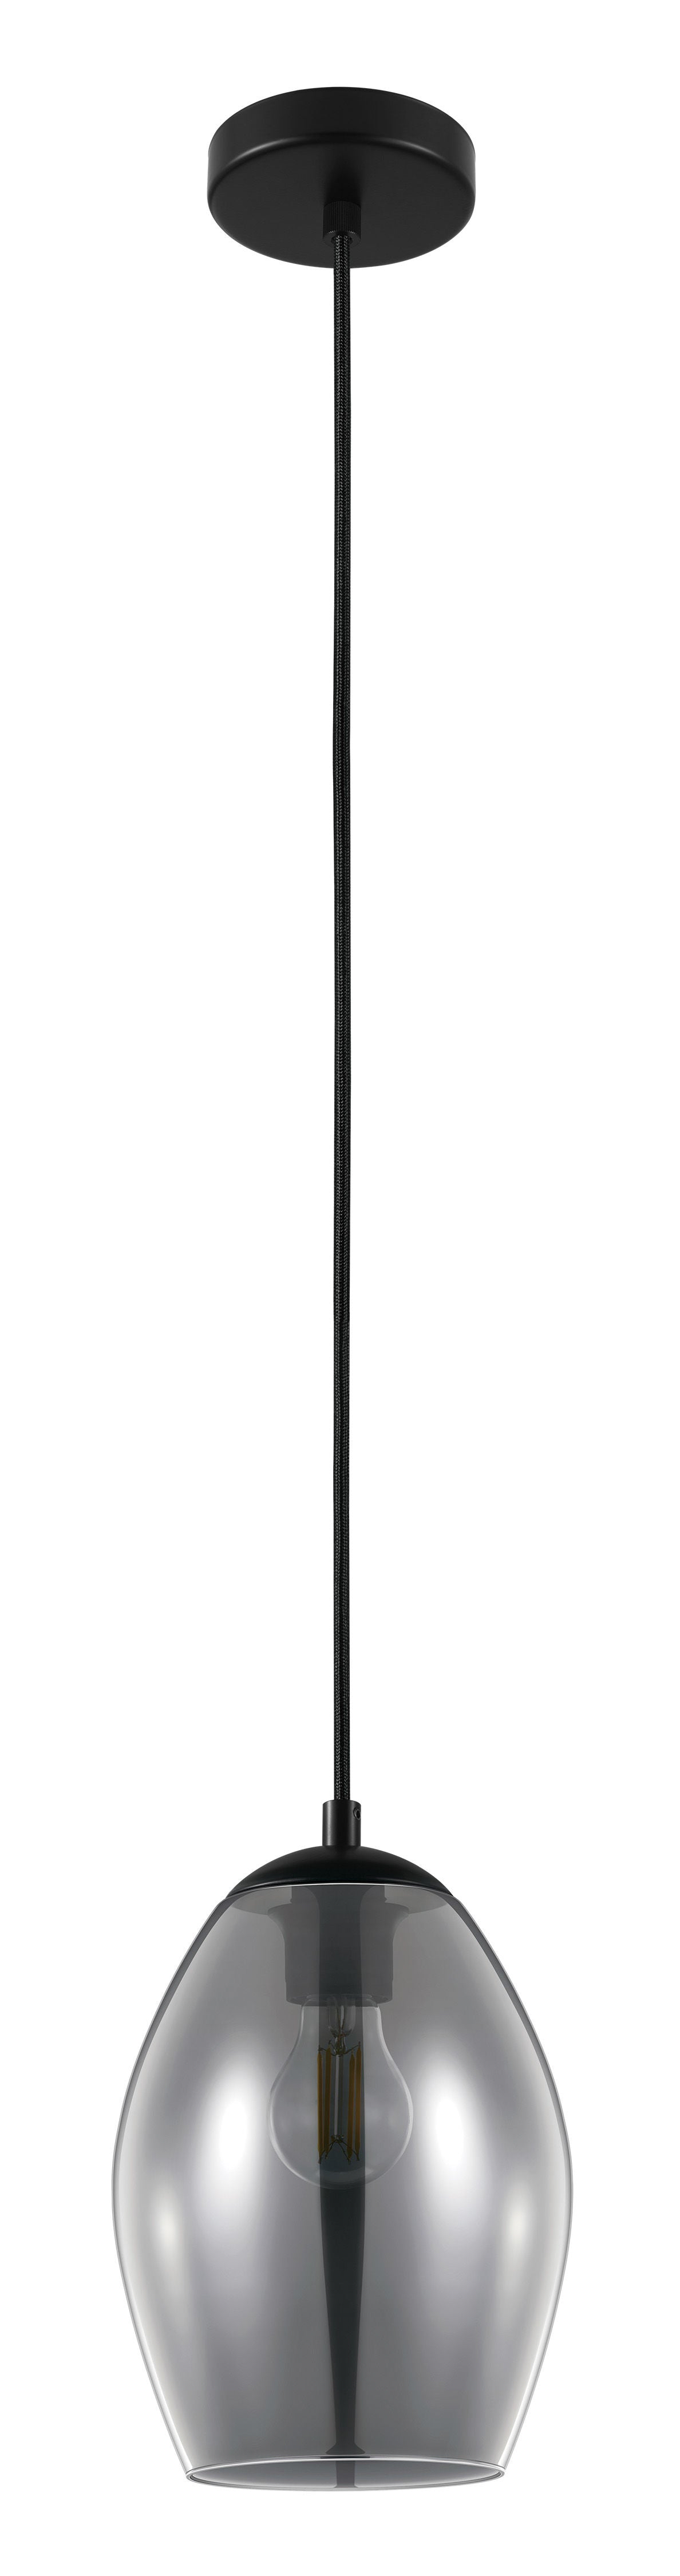 Estanys Suspension simple Noir - 39564A | EGLO